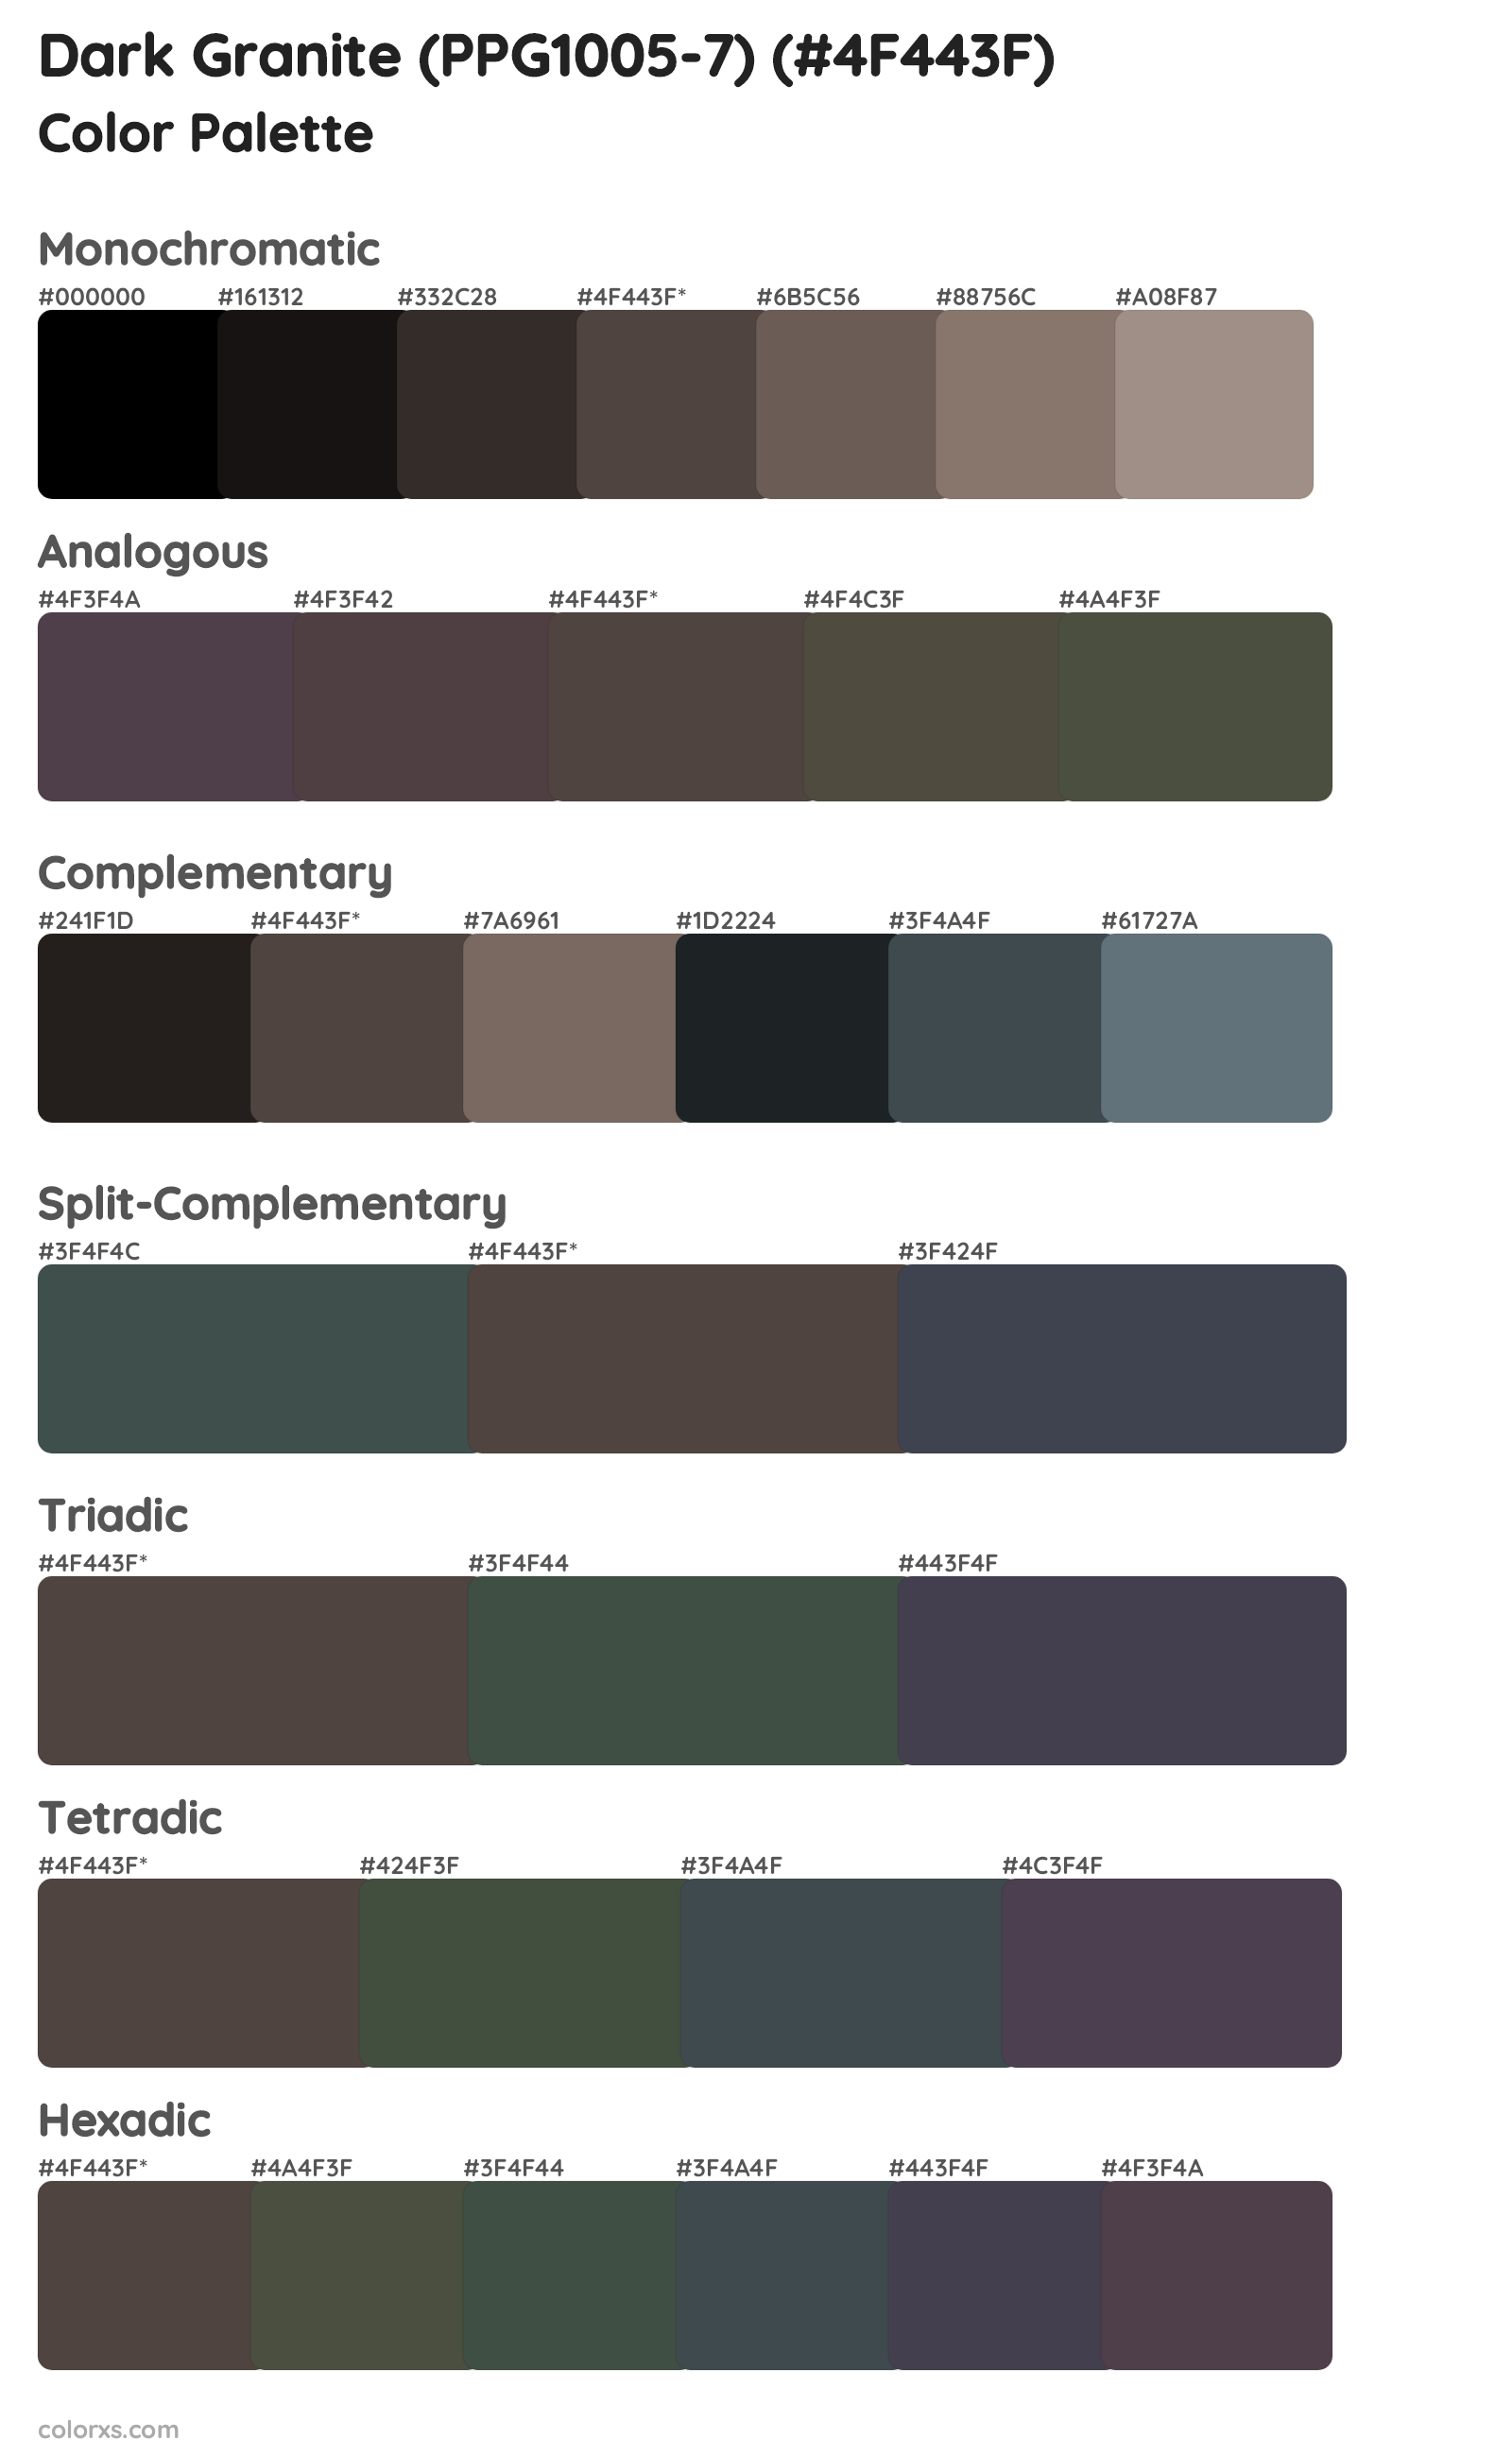 Dark Granite (PPG1005-7) Color Scheme Palettes